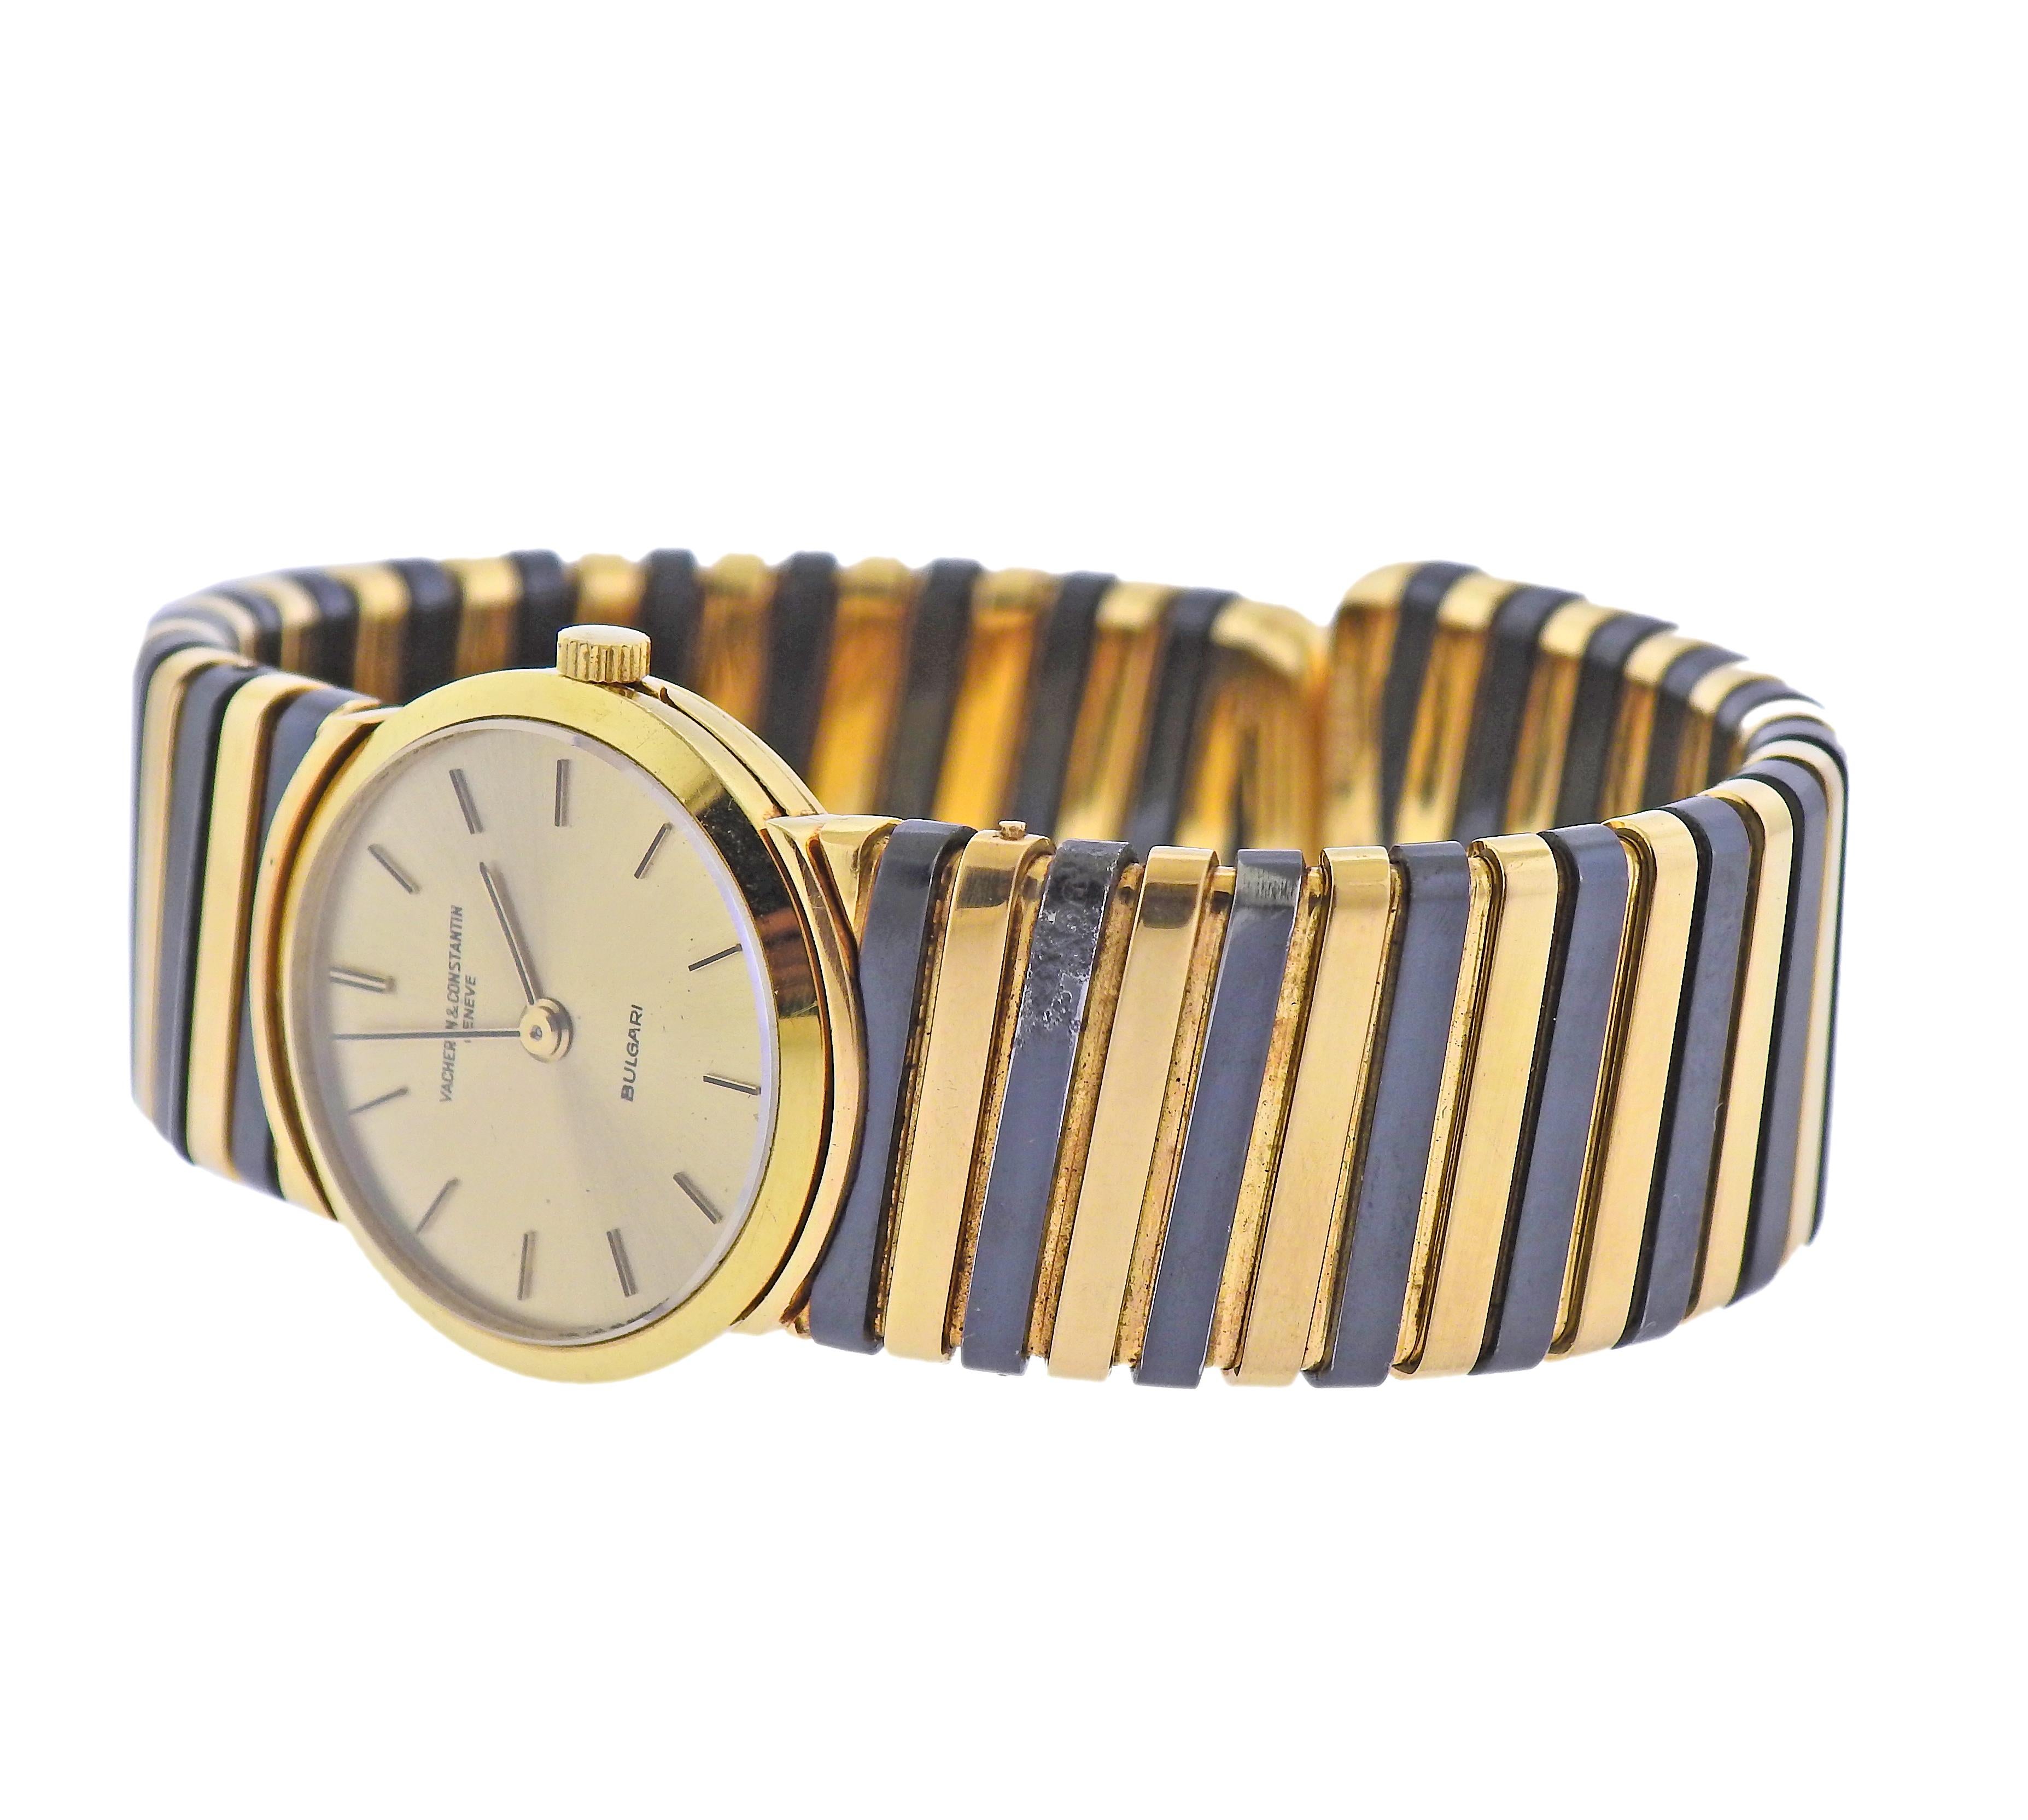 18k gold Tubogas Bvlgari bracelet with Vacheron Constantin watch. Bracelet will fit up to 7